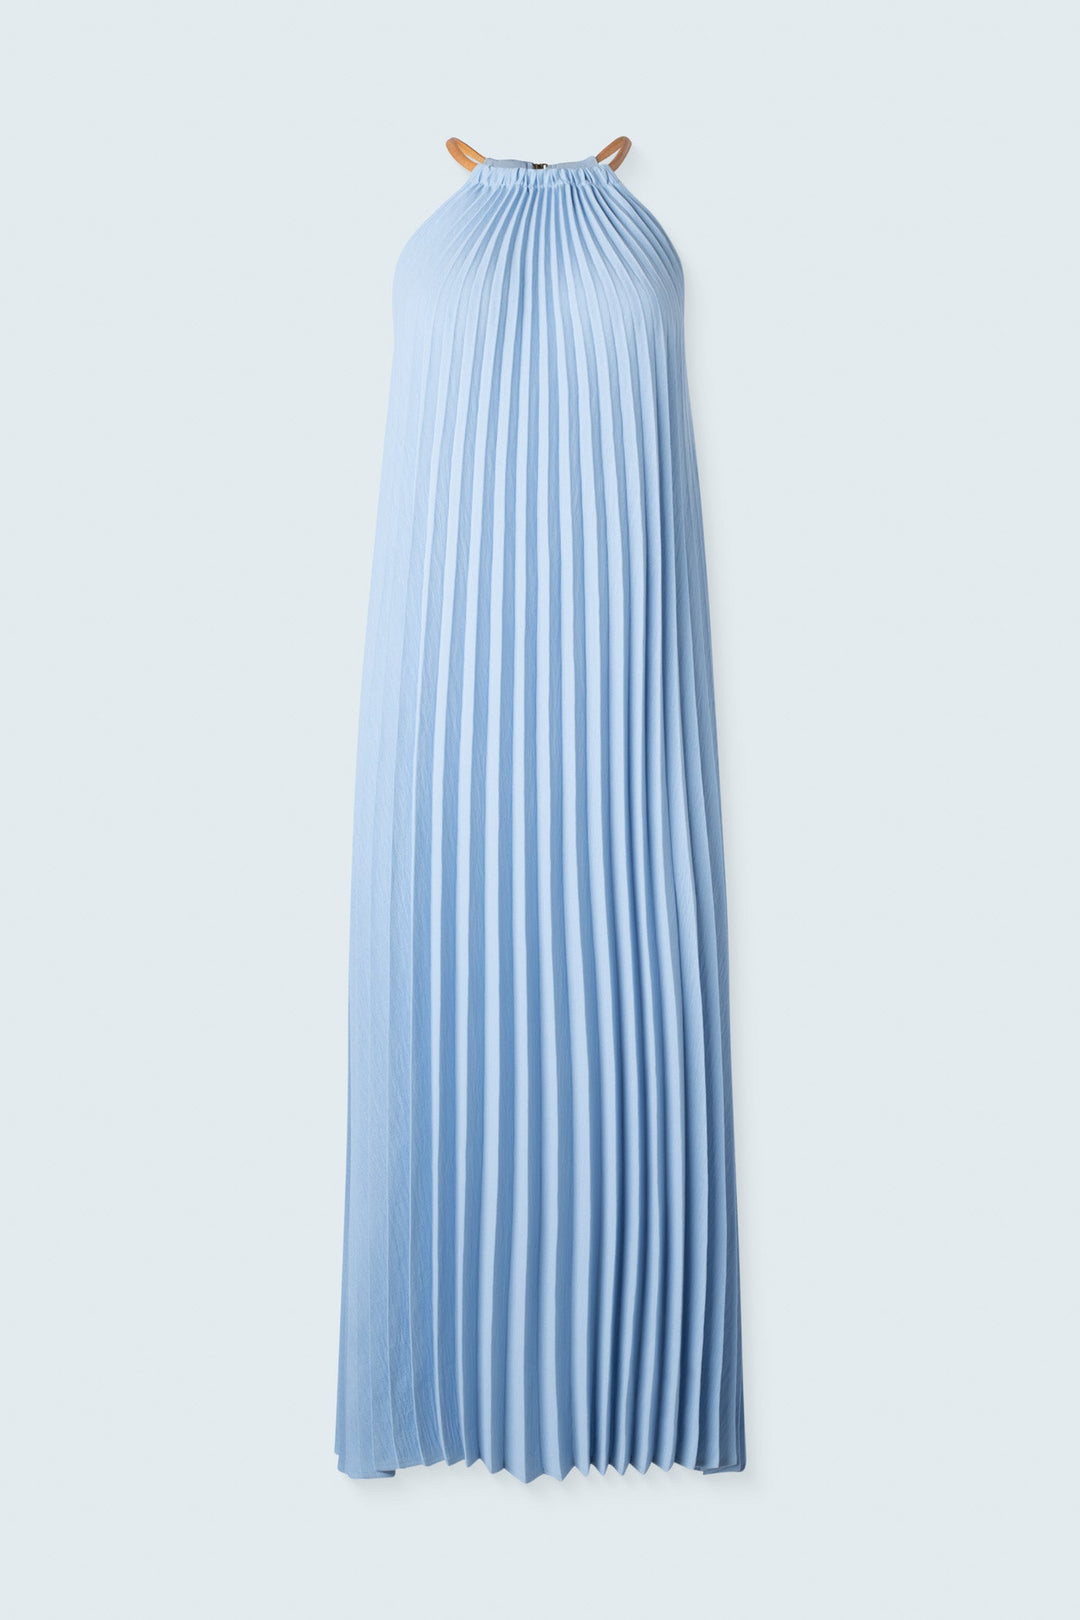 Halter top long pleated dress